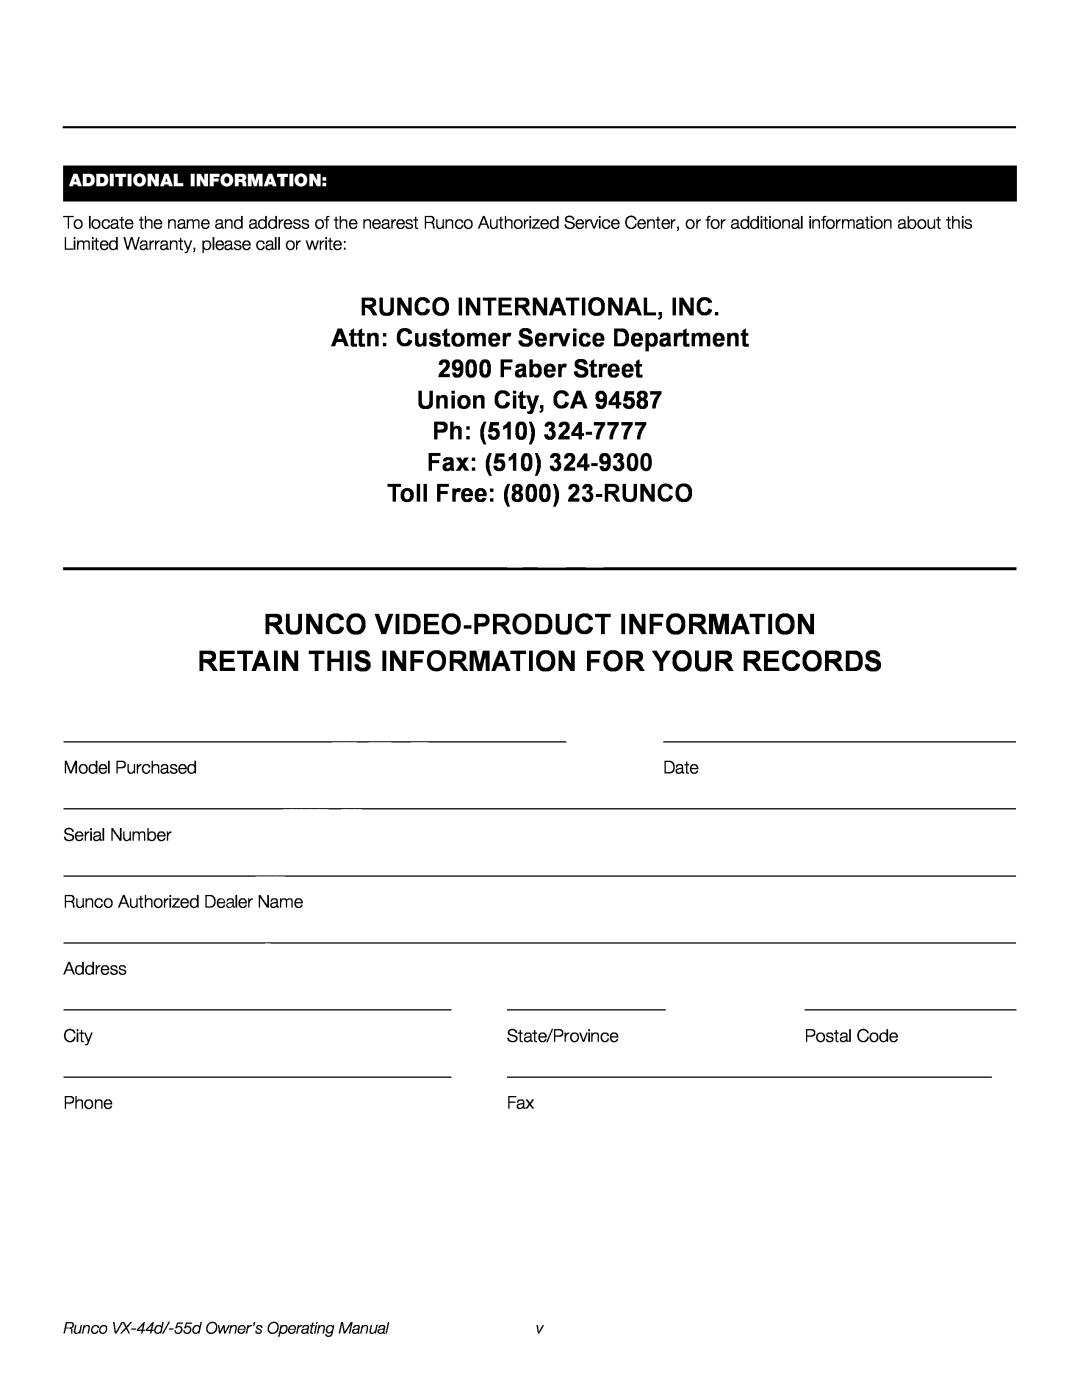 Runco 1080p manual Additional Information, Runco Video-Product Information, Retain This Information For Your Records 